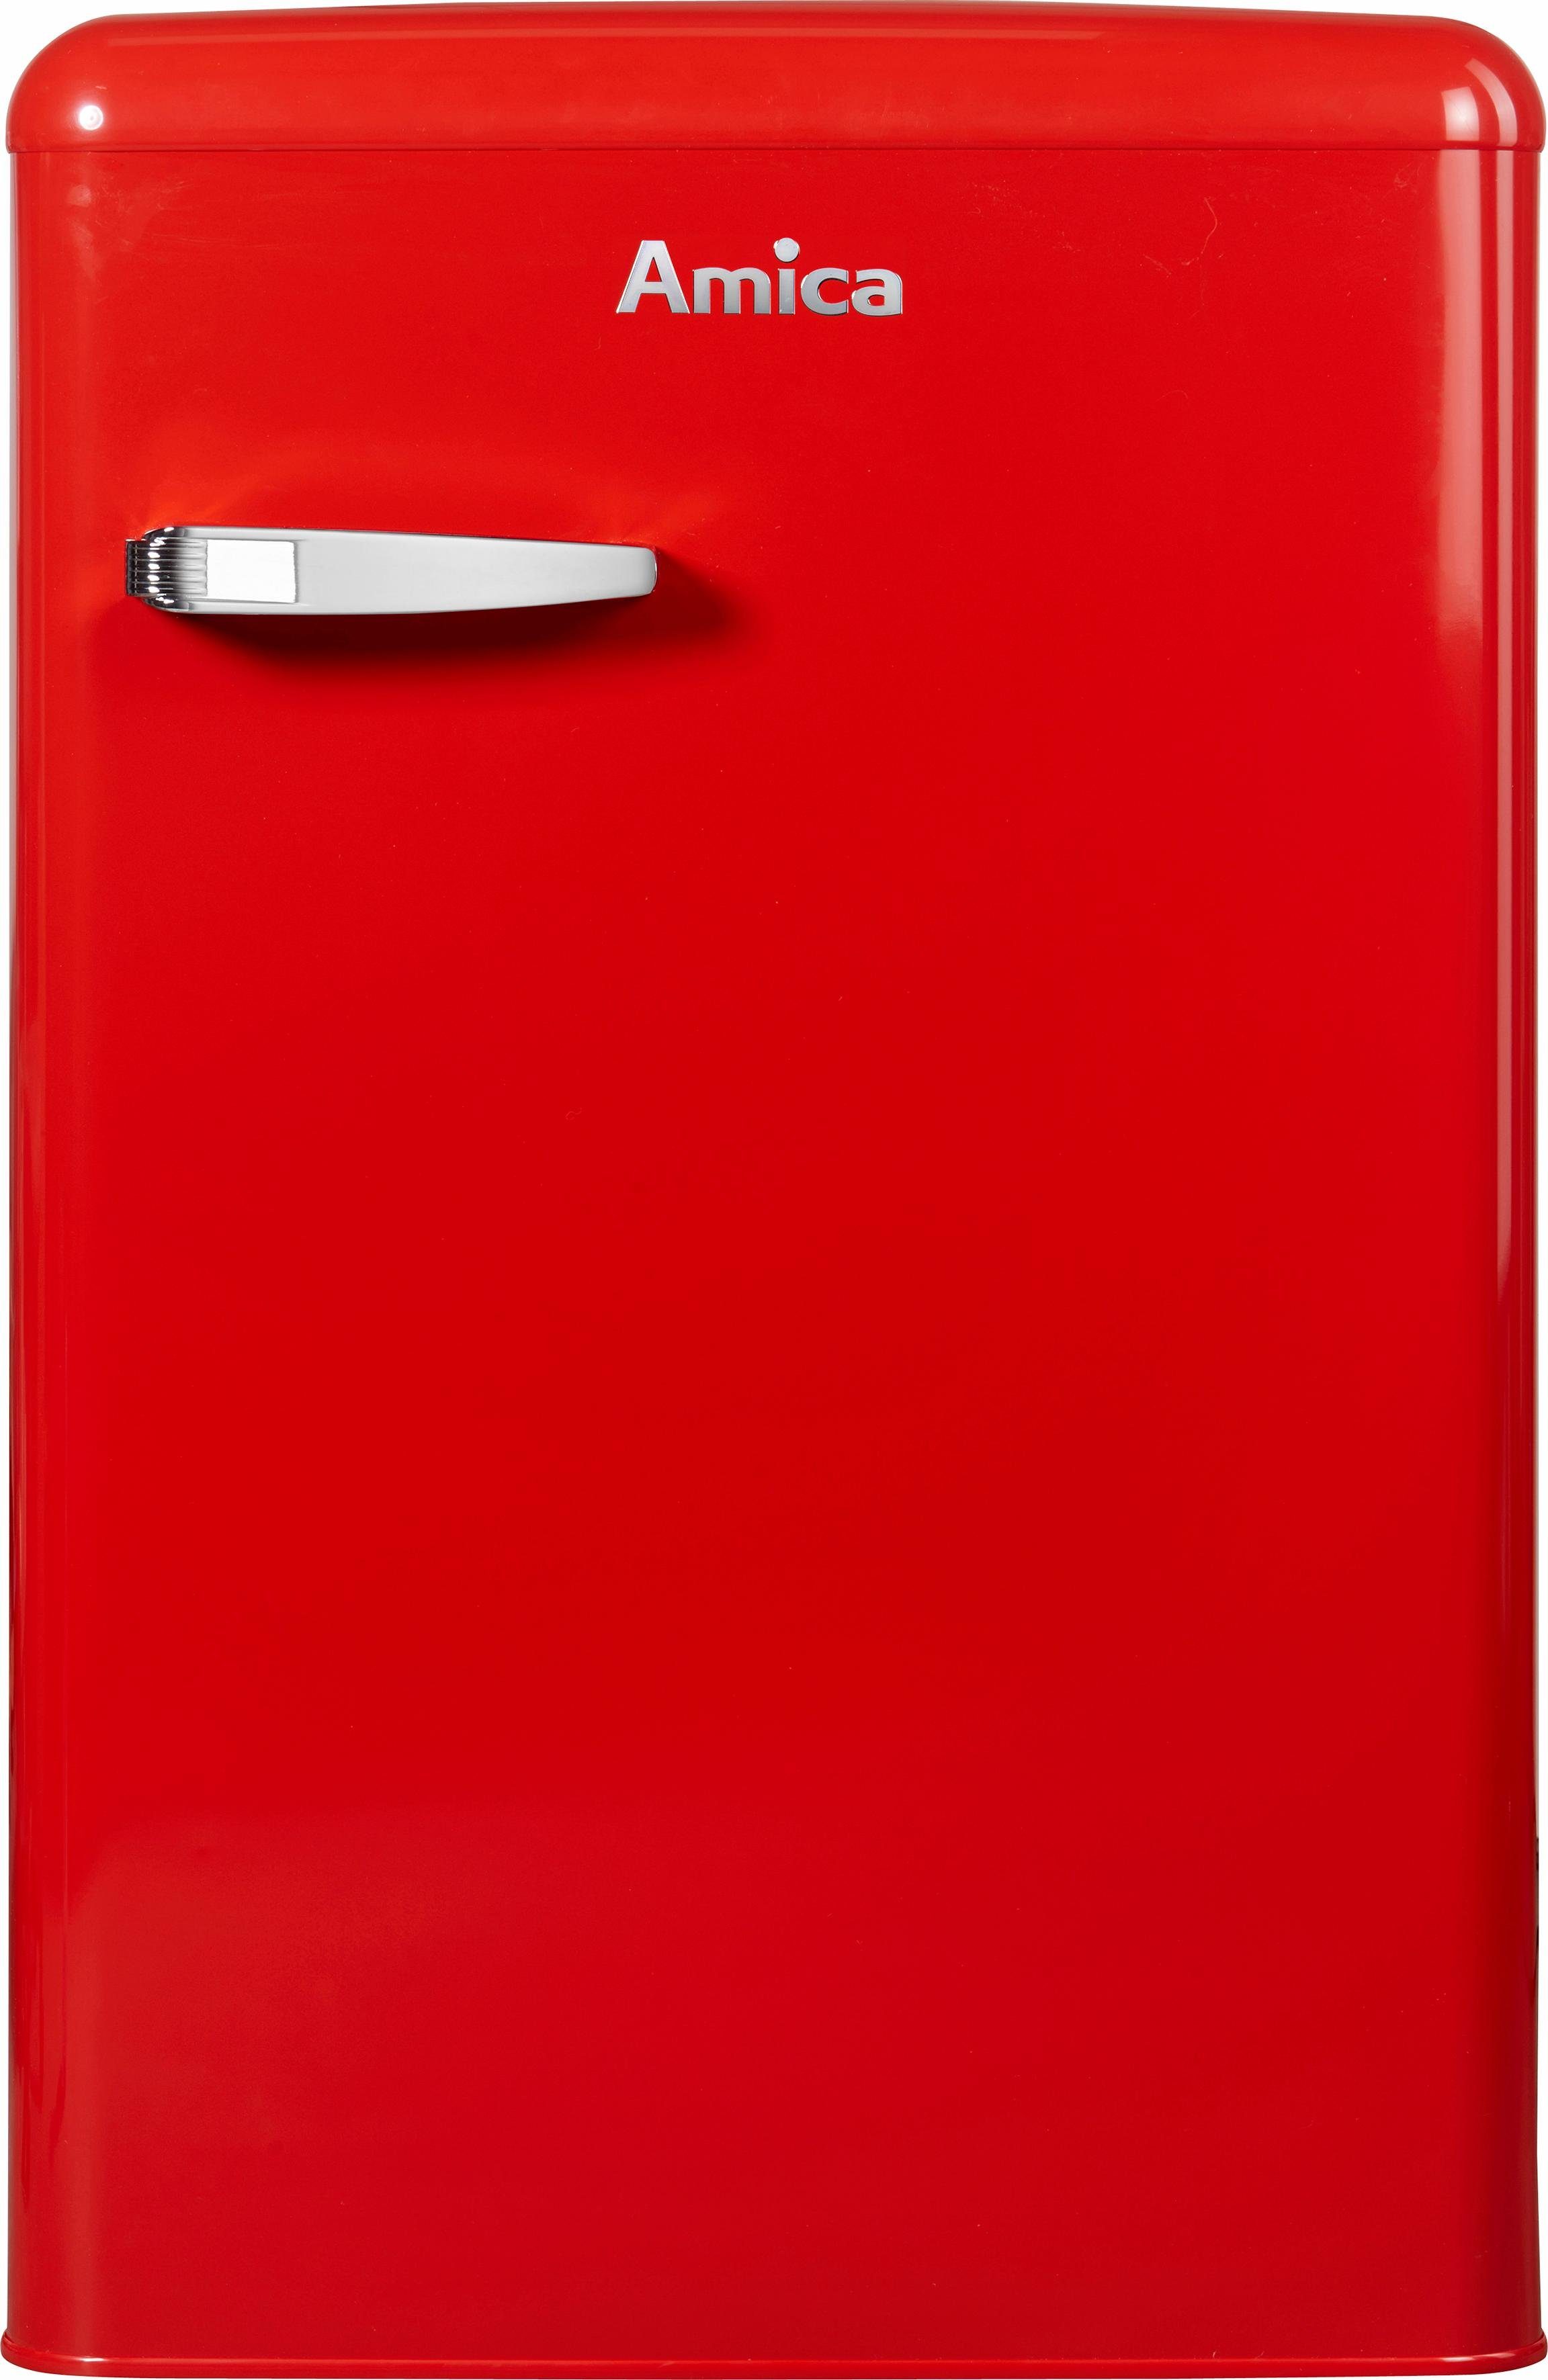 Top rot Amica cm 55 cm breit 87,5 hoch, Kühlschrank R, Table KS 15610